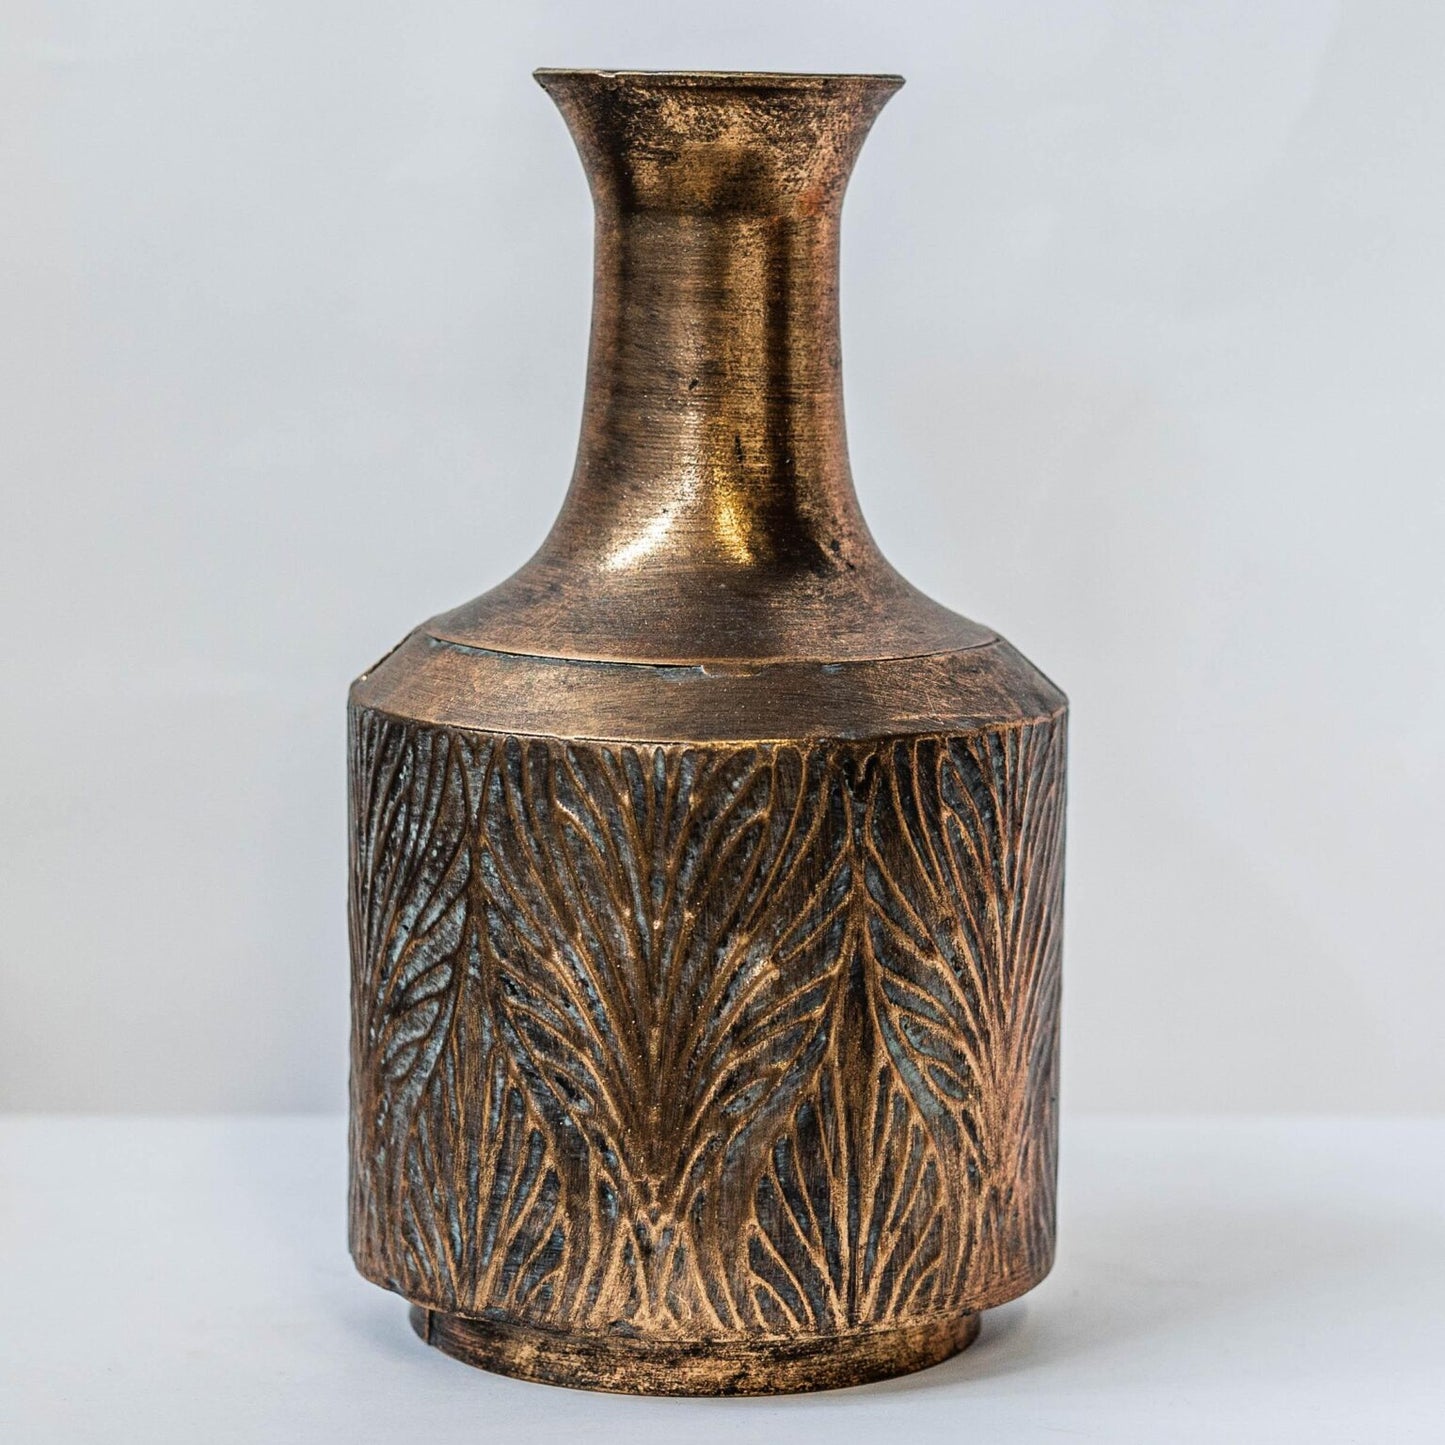 Metal Vase - Aged Bronze